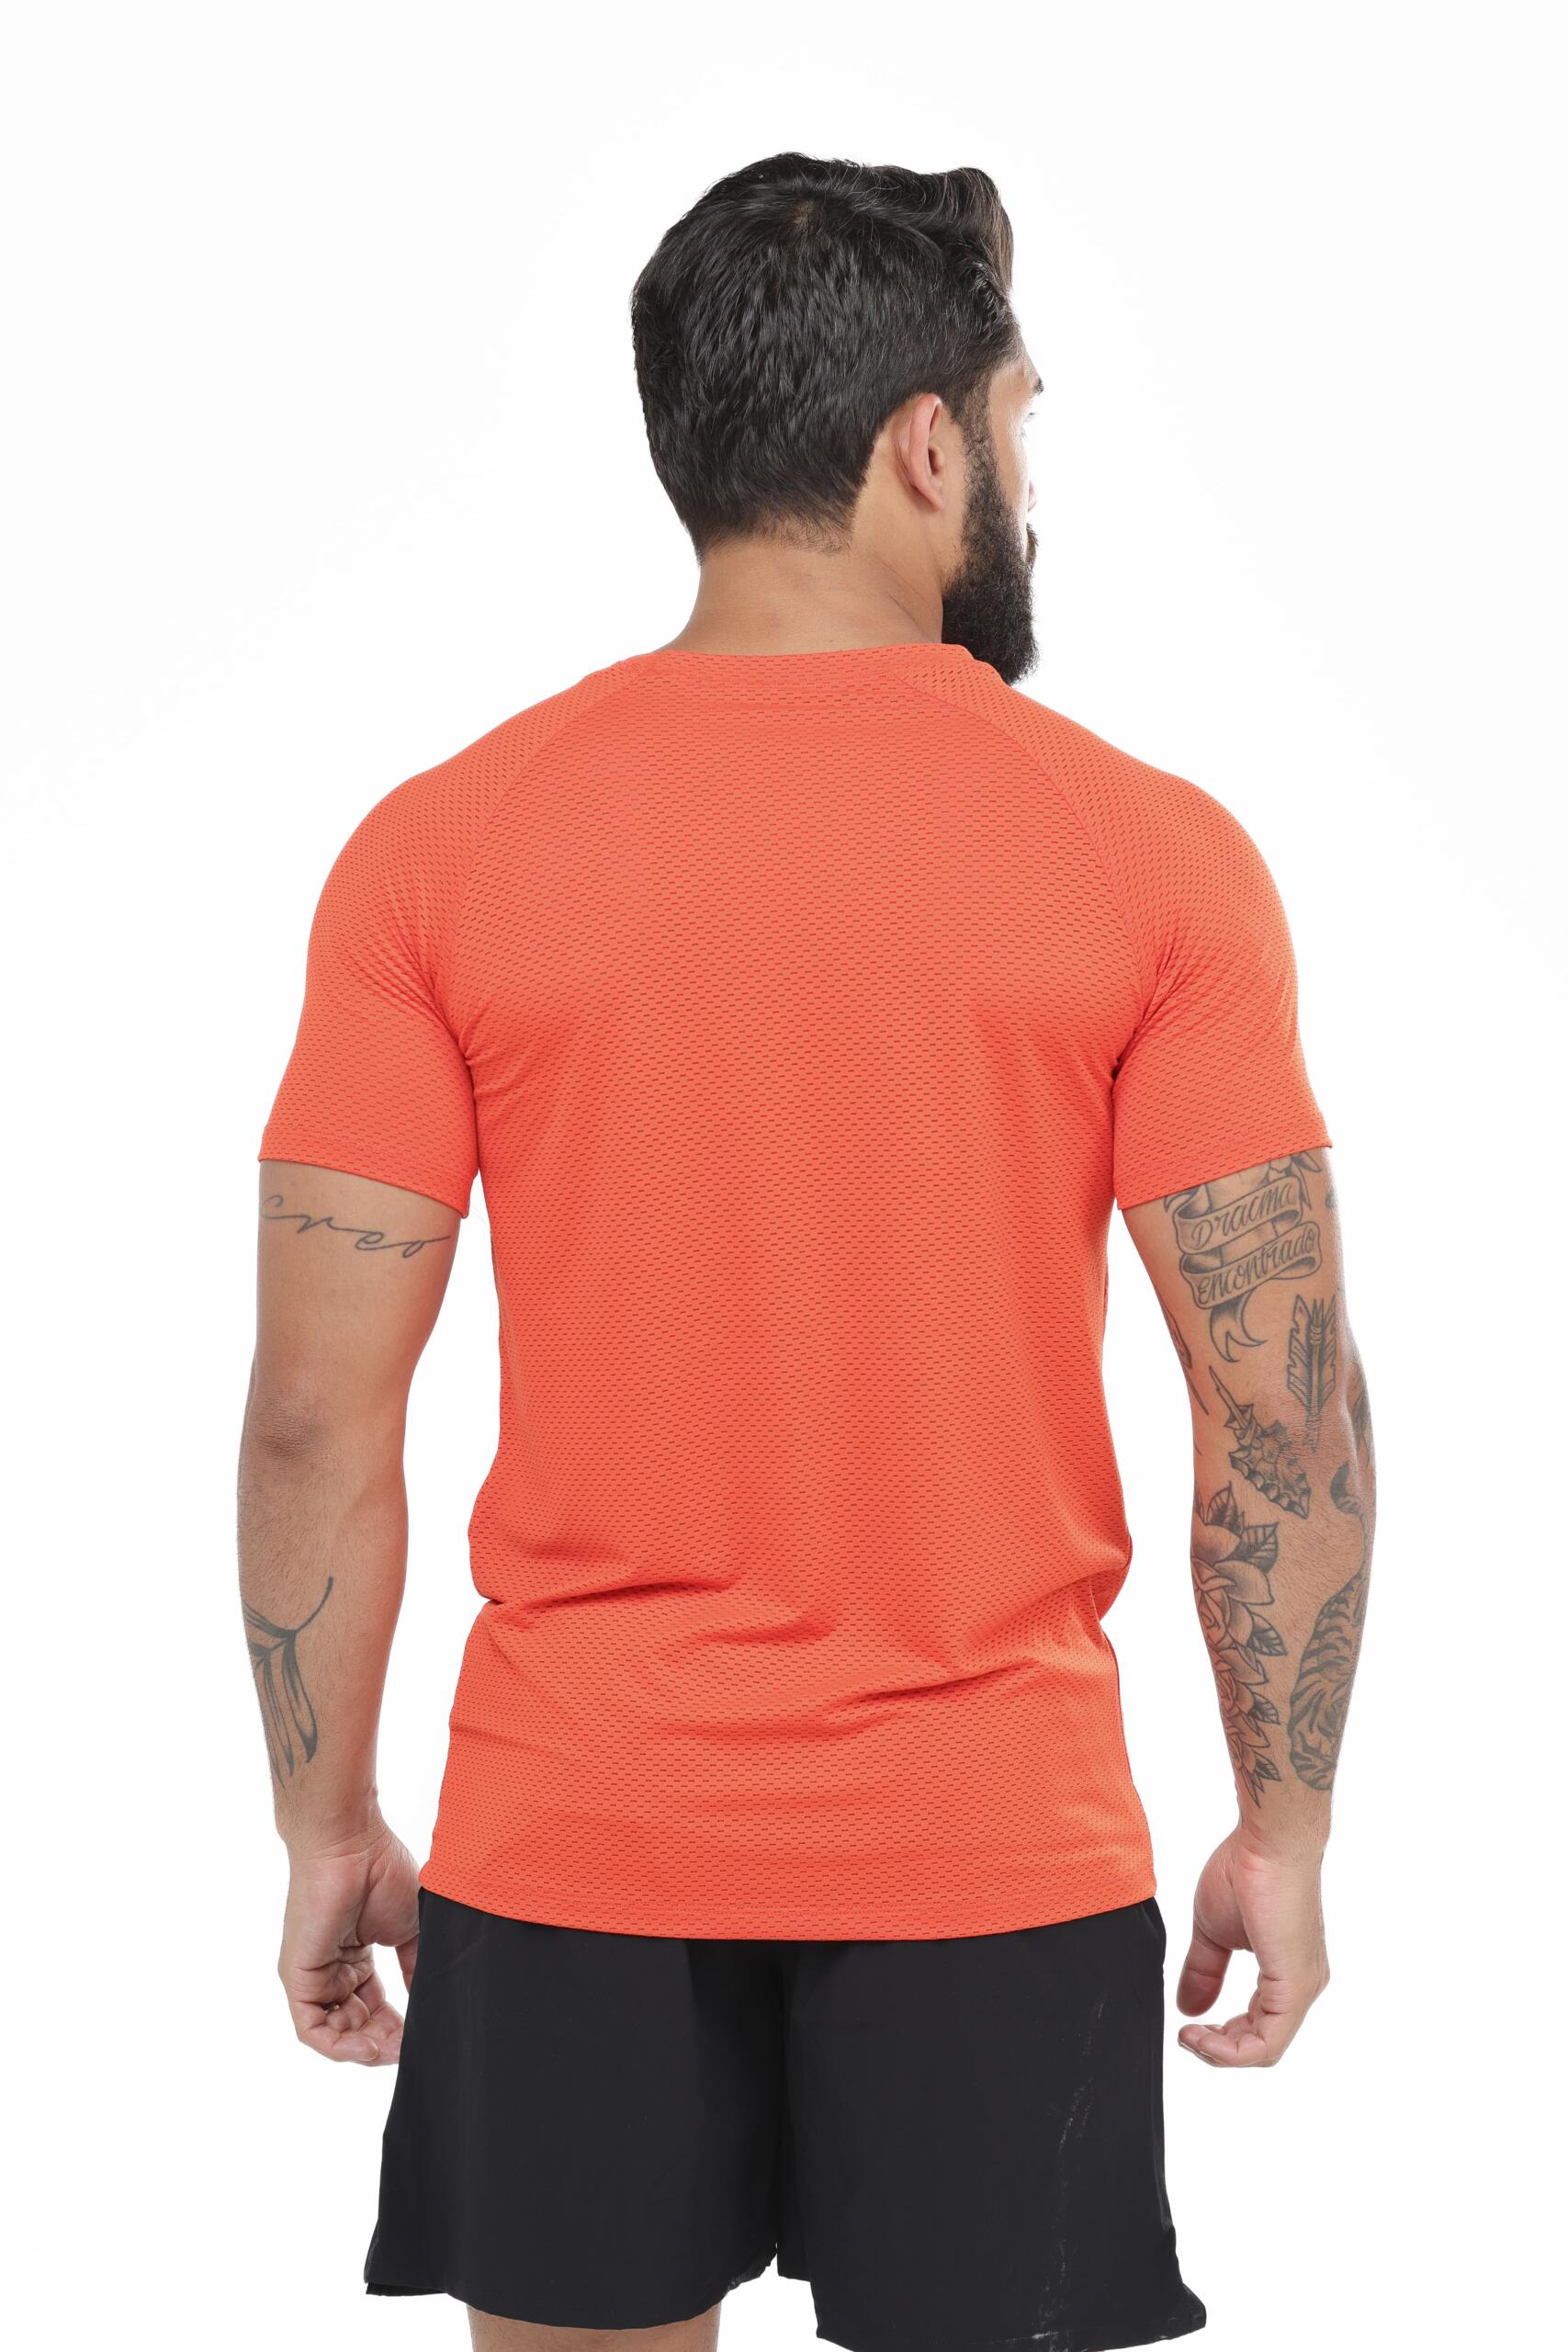 Camiseta Training Air Shoulder Tangerine 2-min